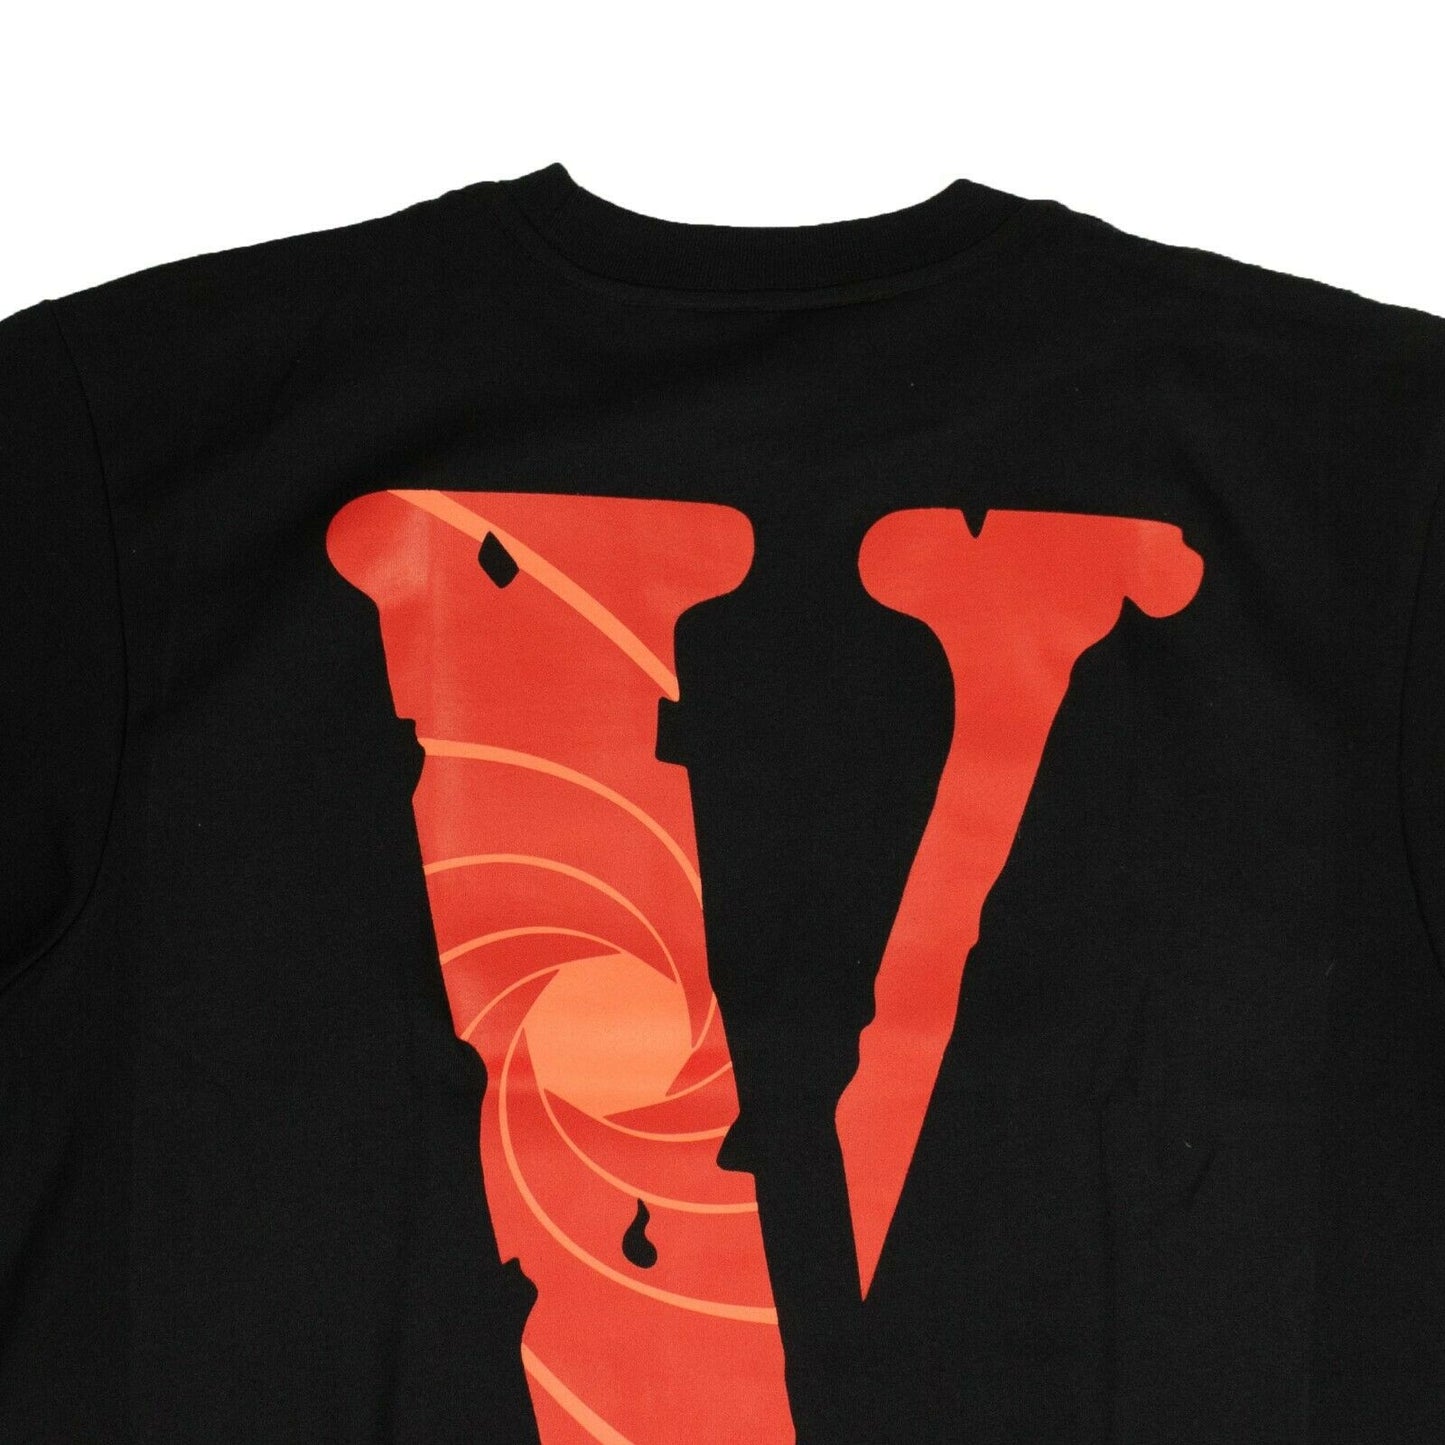 Vlone Vice City Short Sleeves T-Shirt - Black